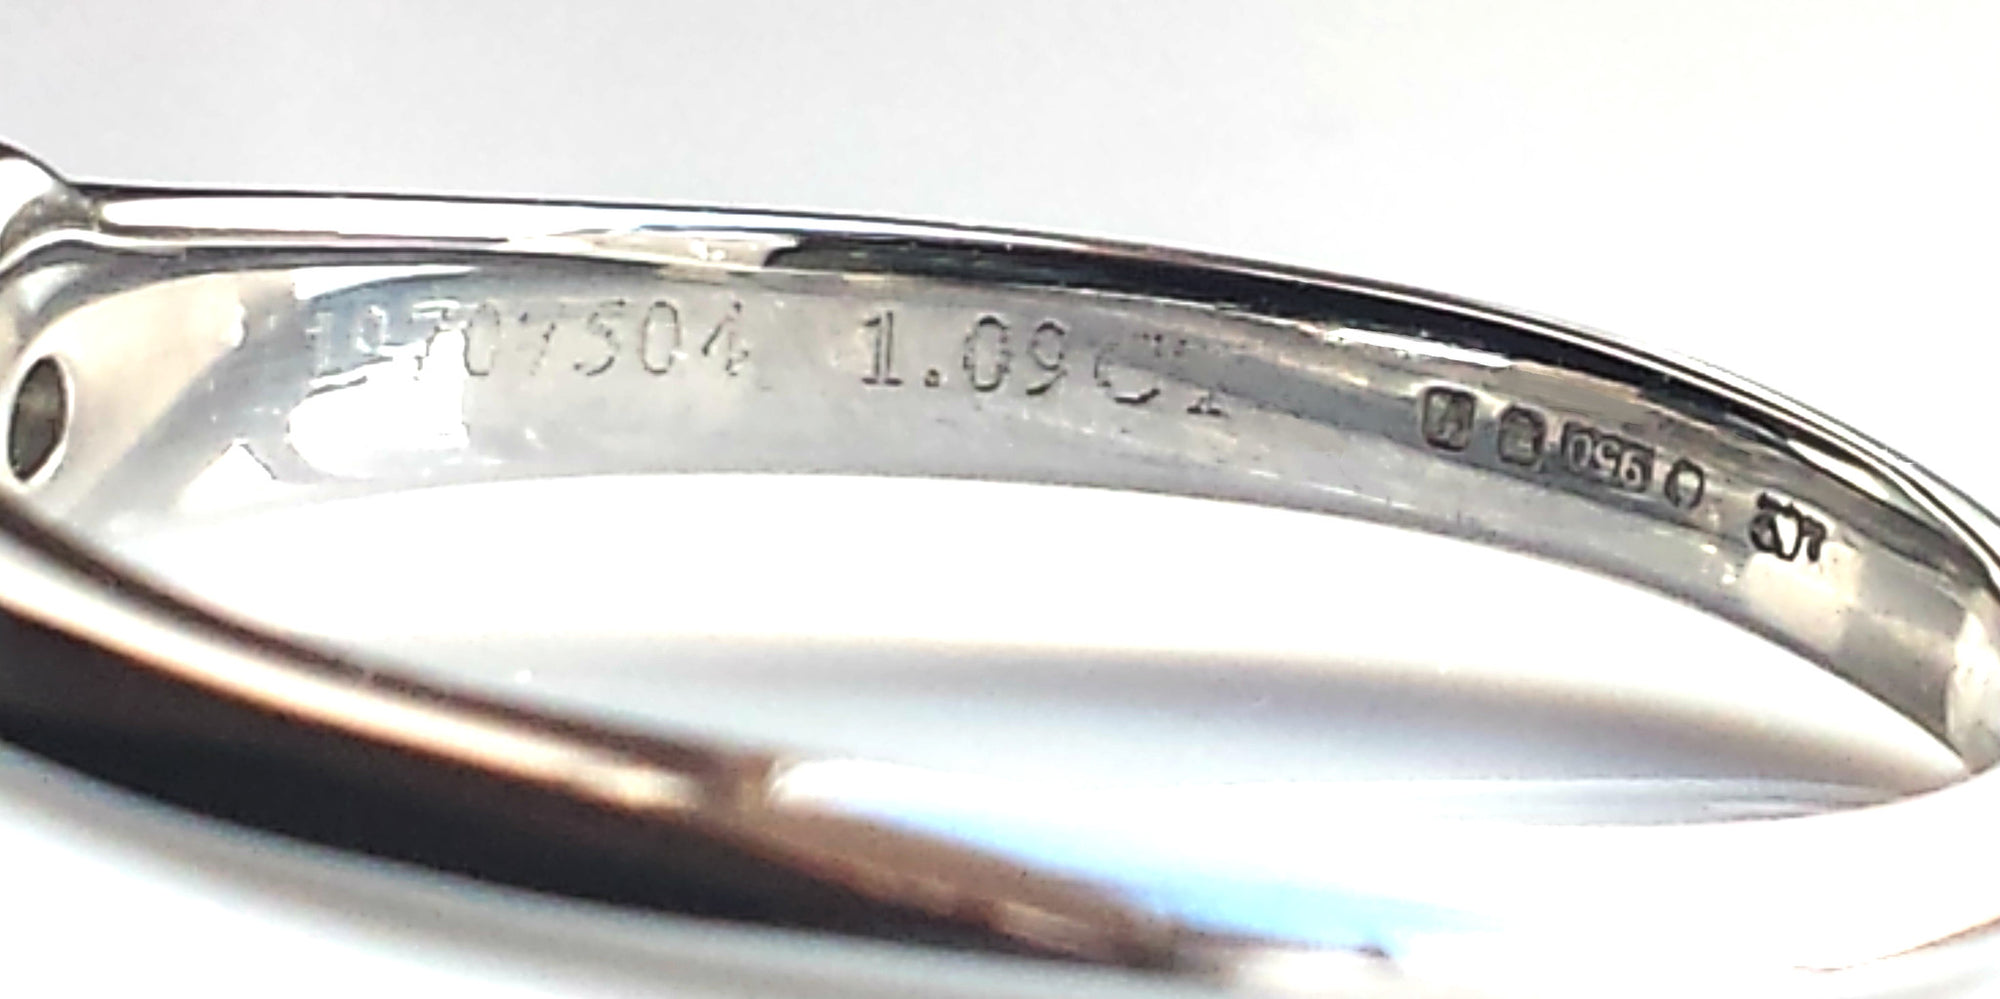 Tiffany & Co. 1.09ct G/VVS2 Round Brilliant Cut Diamond Engagement Ring